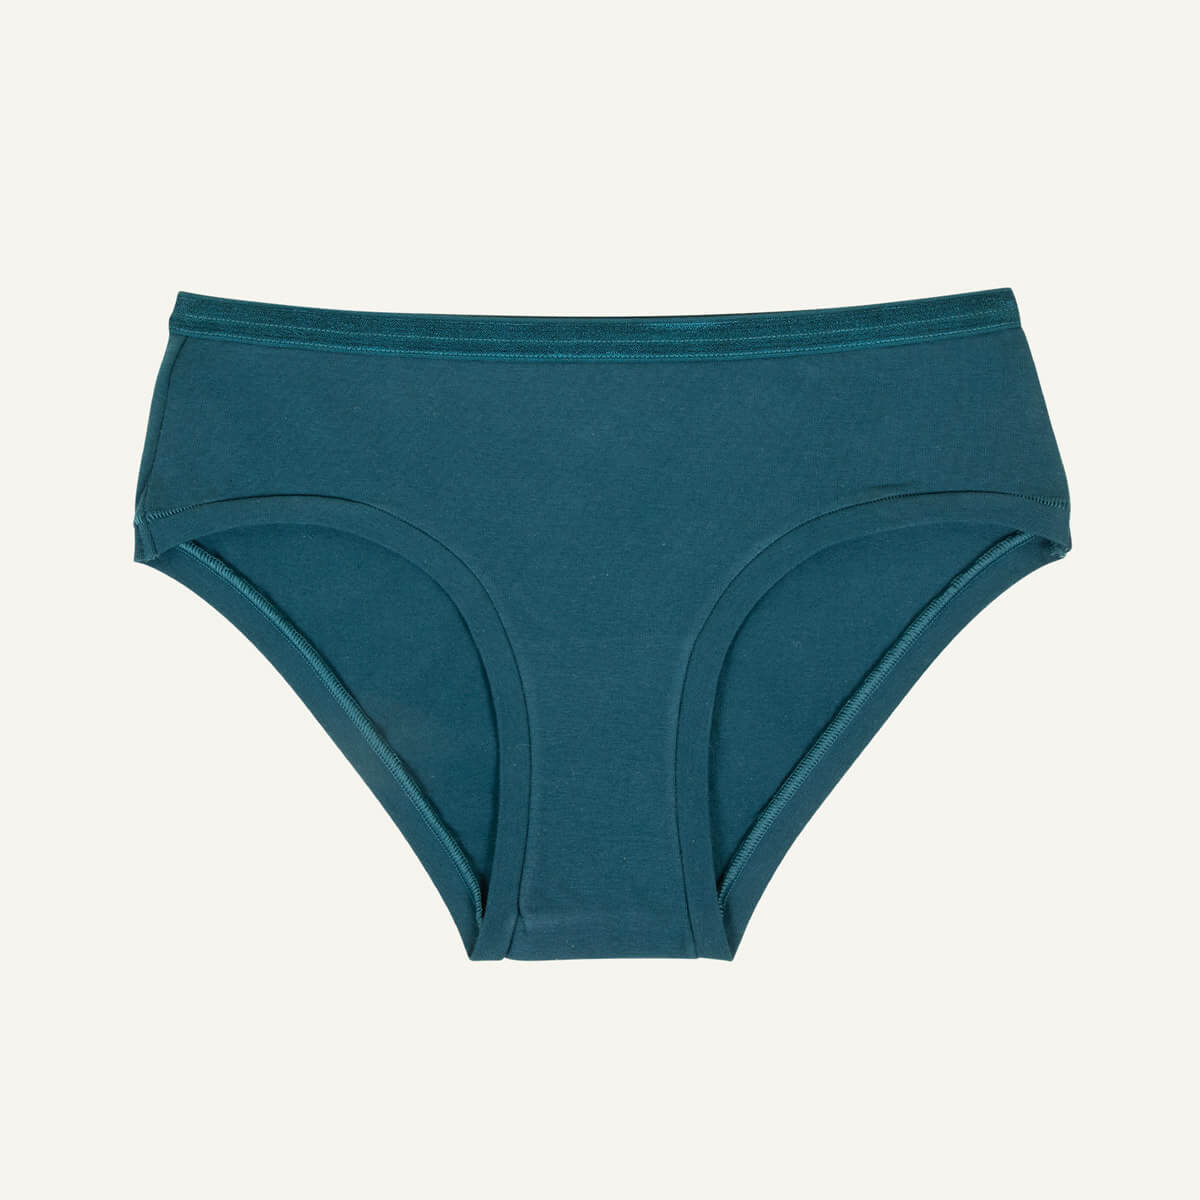 Buy Mid Waist Boyshorts Panty in Peach Colour - Cotton Online